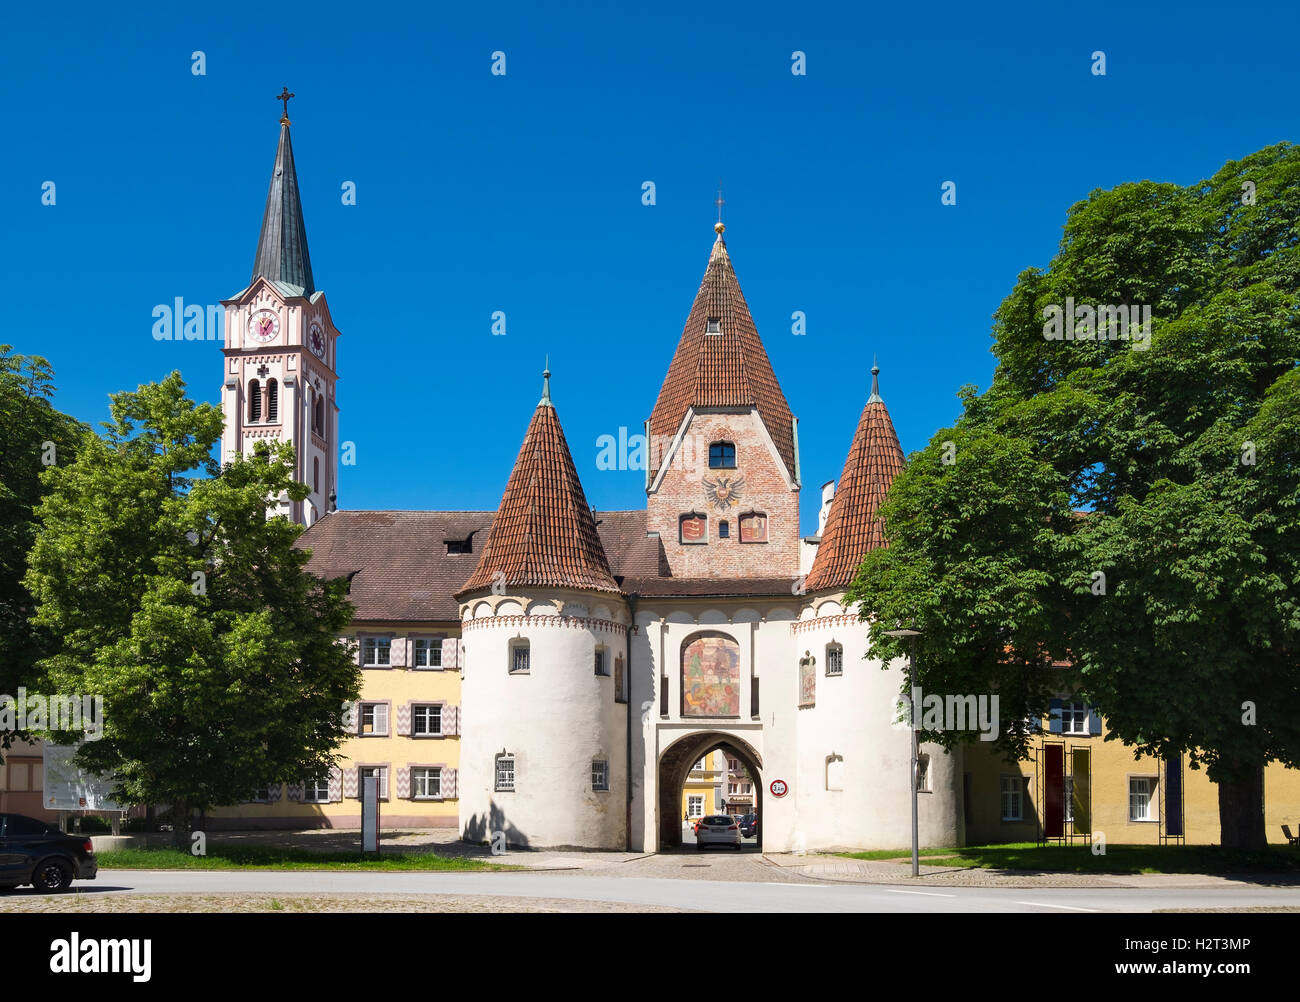 Puerta superior, city gate, Weissenhorn, suabia, Baviera, Alemania Foto de stock